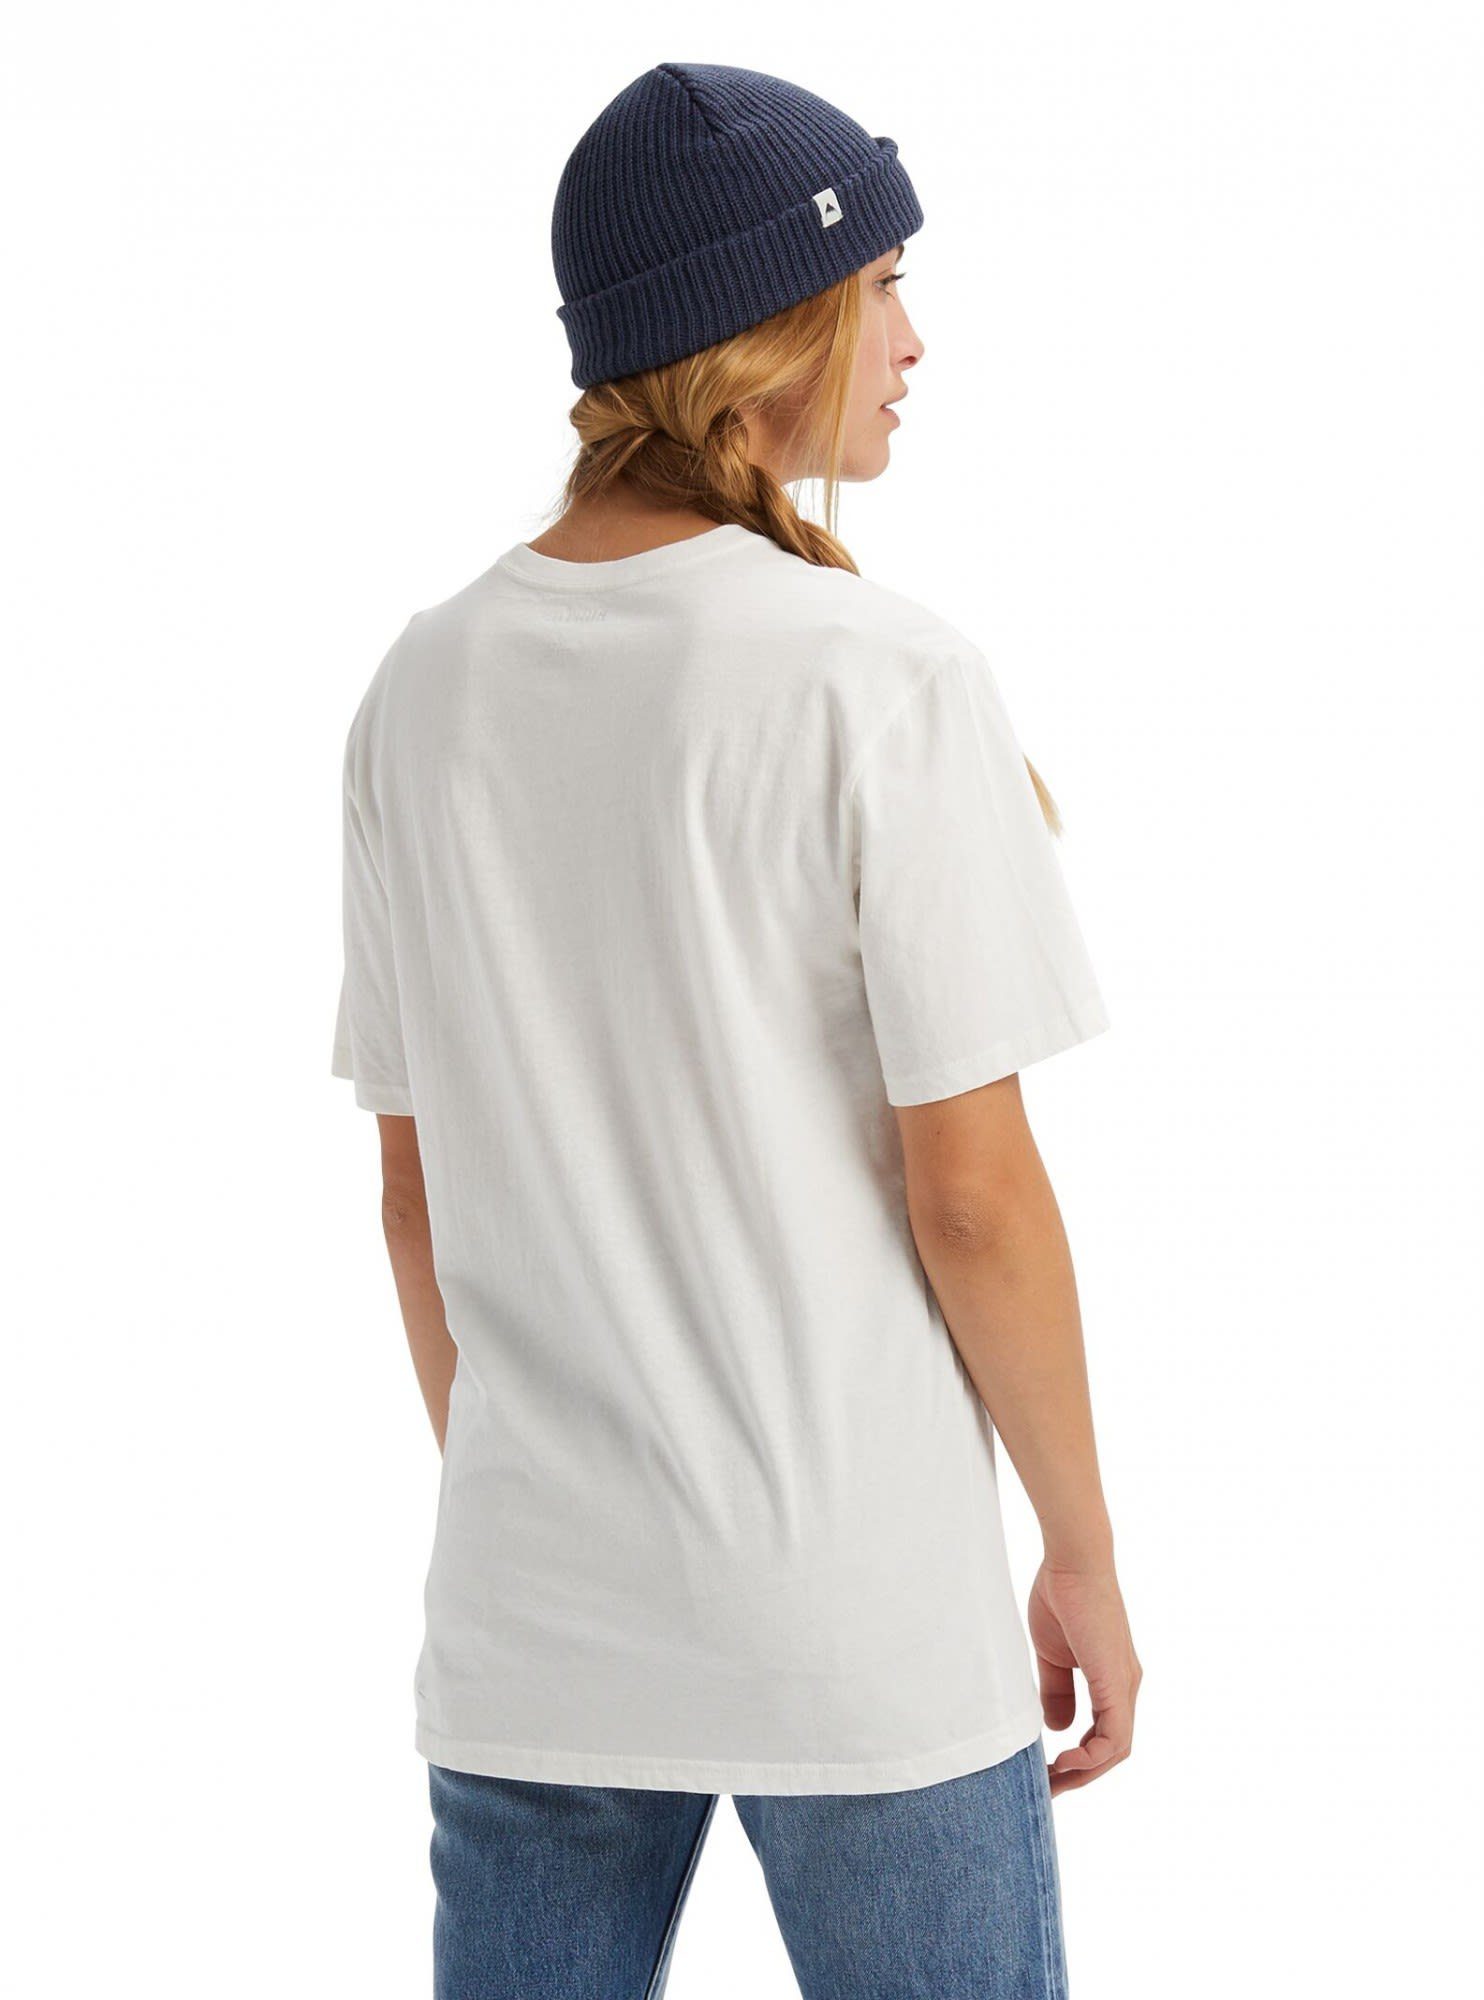 Burton T-Shirt Burton Underhill Shortsleeve White Tee Stout Kurzarm-Shirt